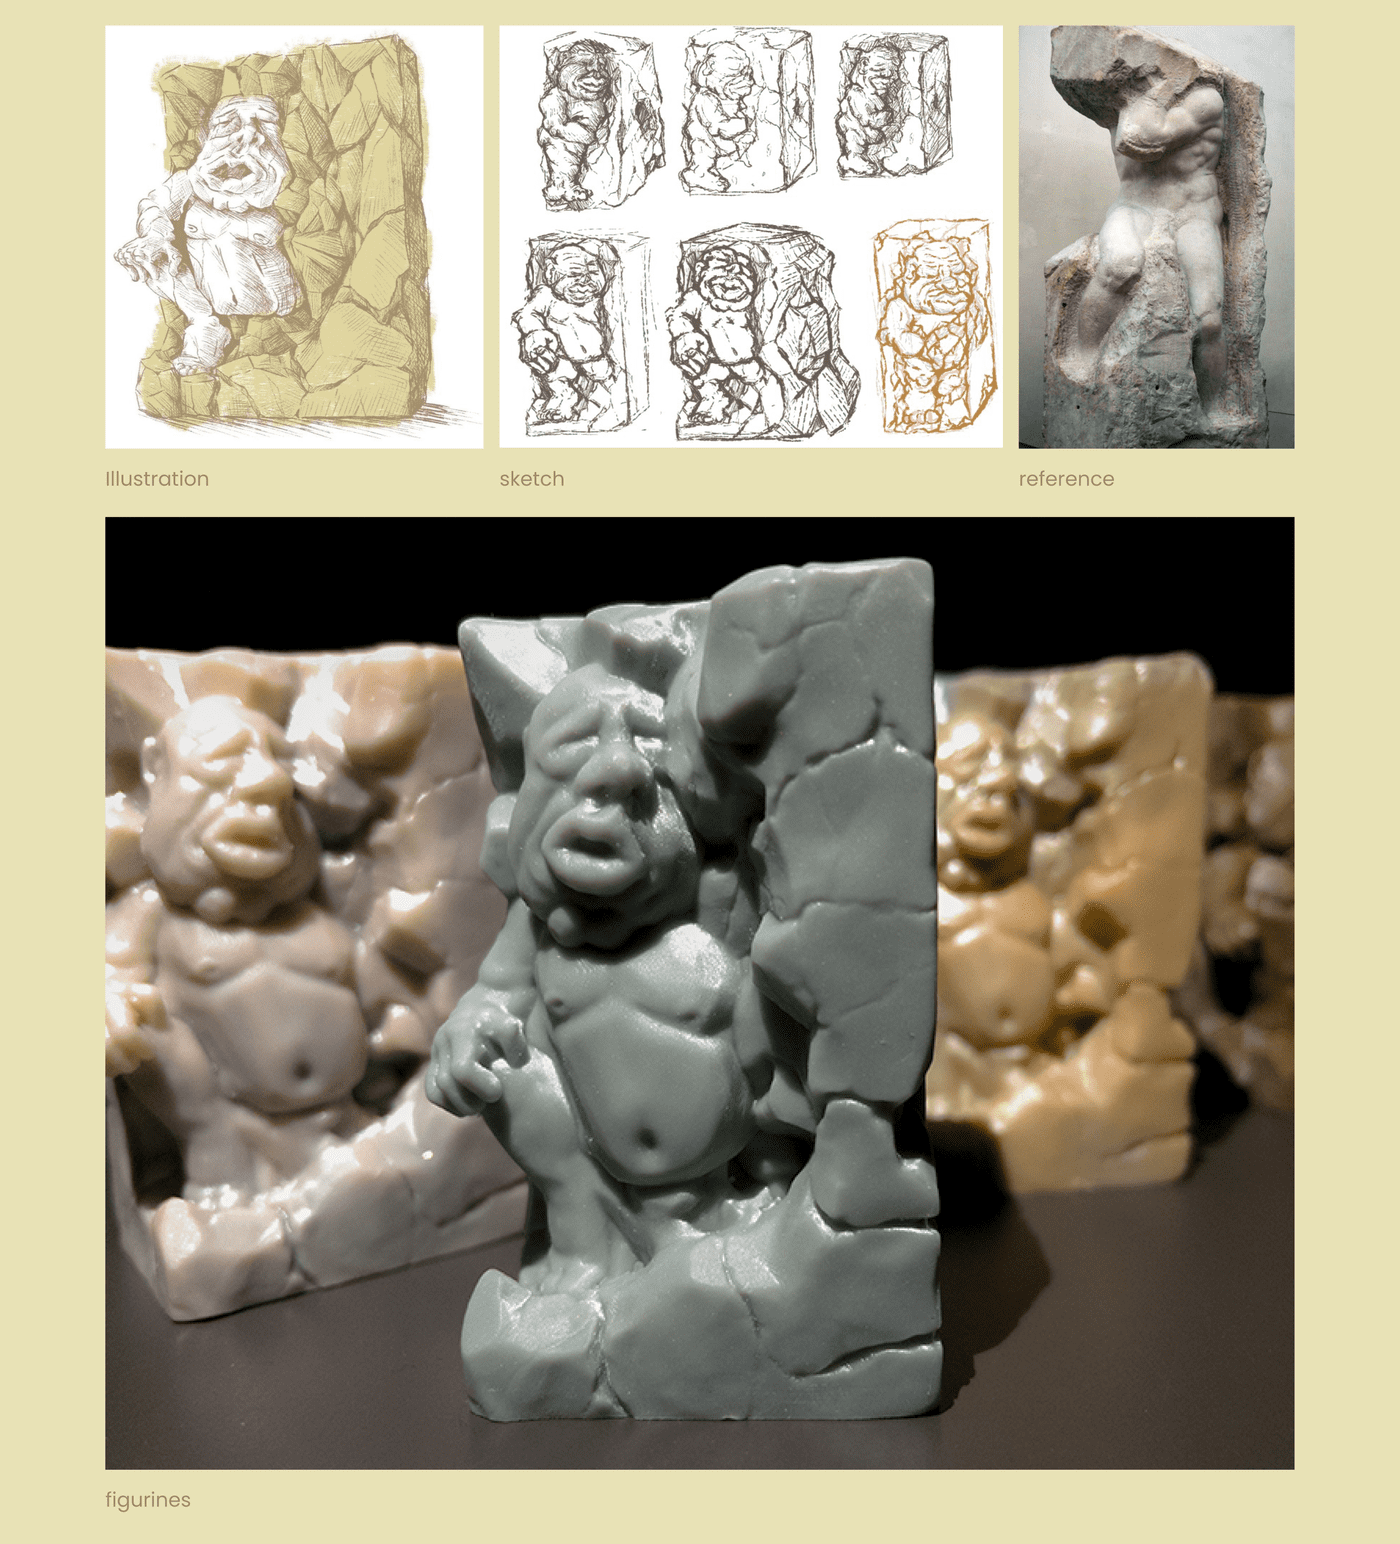 3d modeling 3d printing art toy Character designer figure designer toy figurine illustrations key visual Wabi Sabi